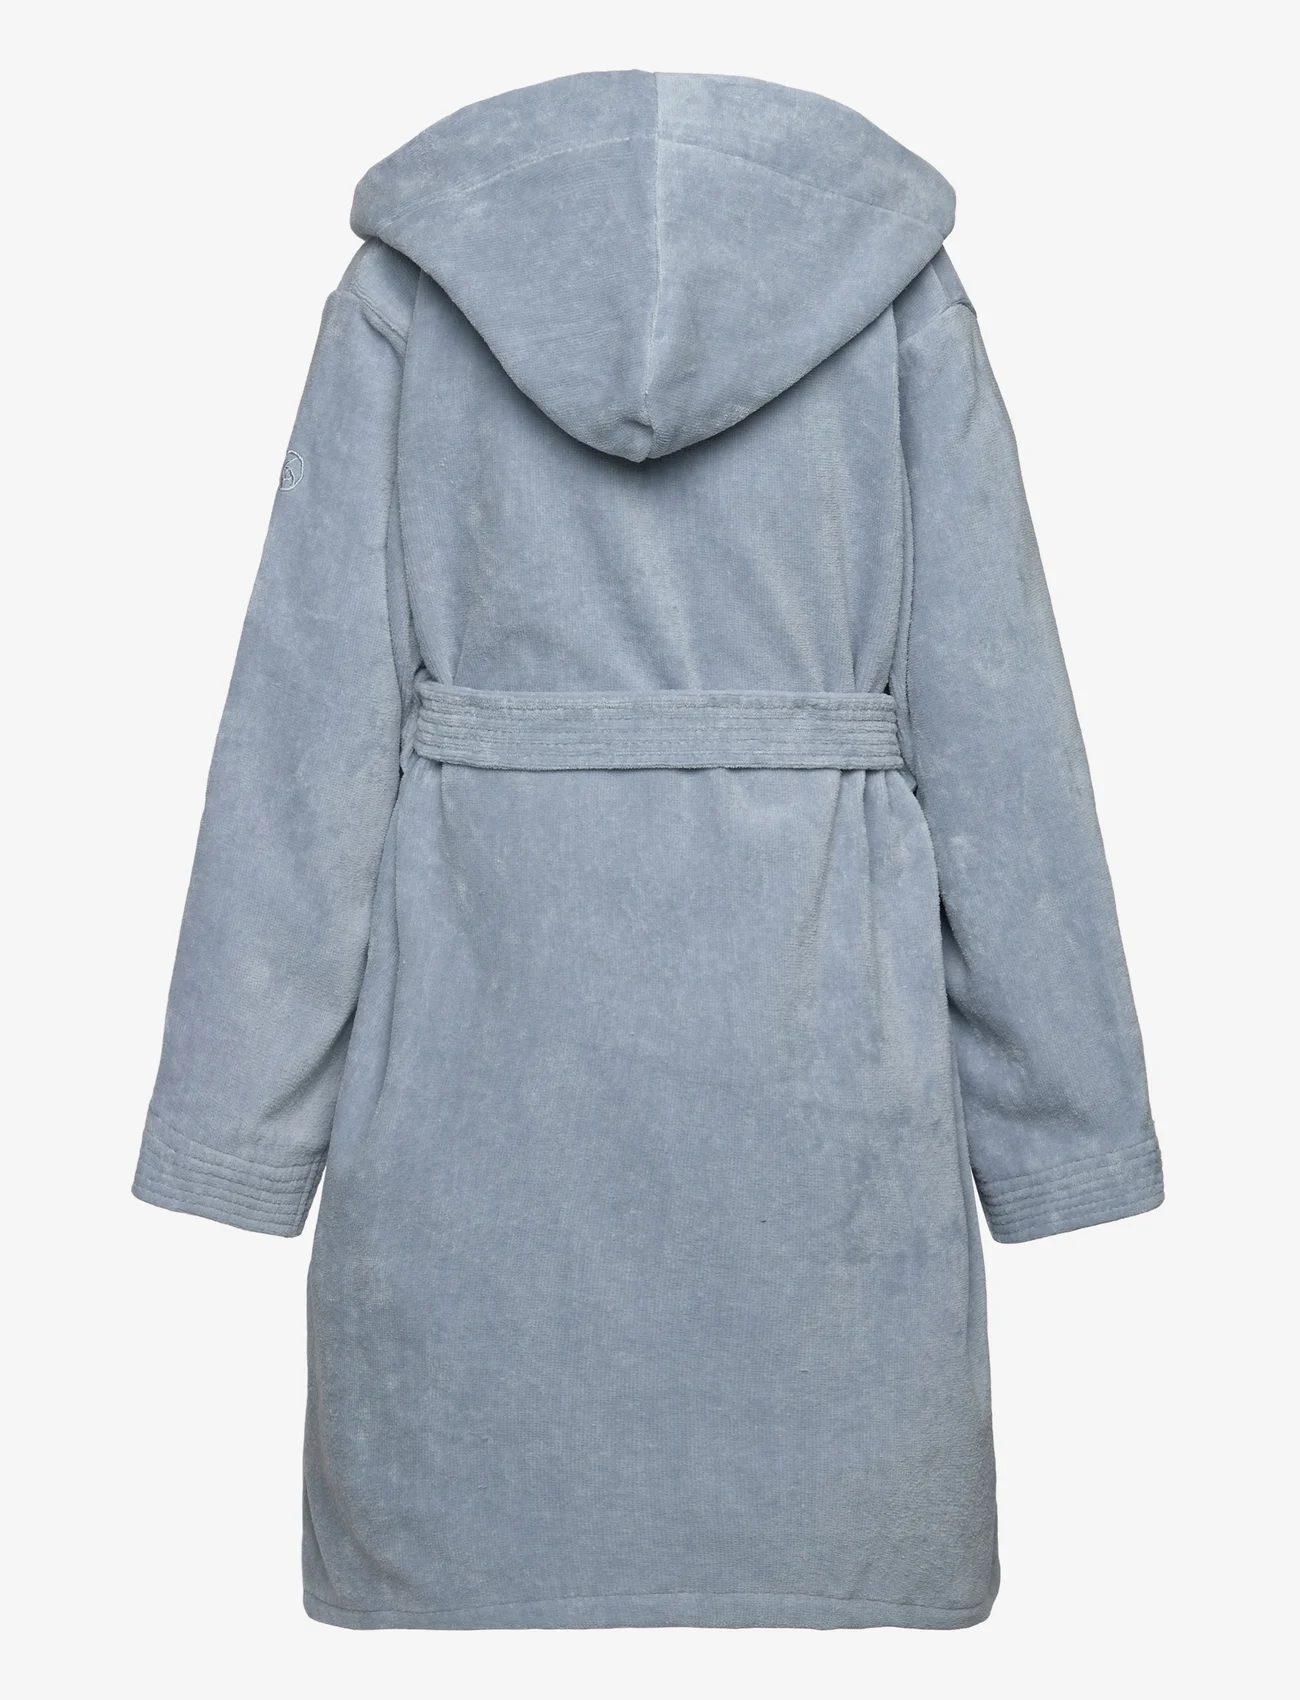 Rosemunde Kids - Organic robe - ondergoed & nachtkleding - dusty blue - 1